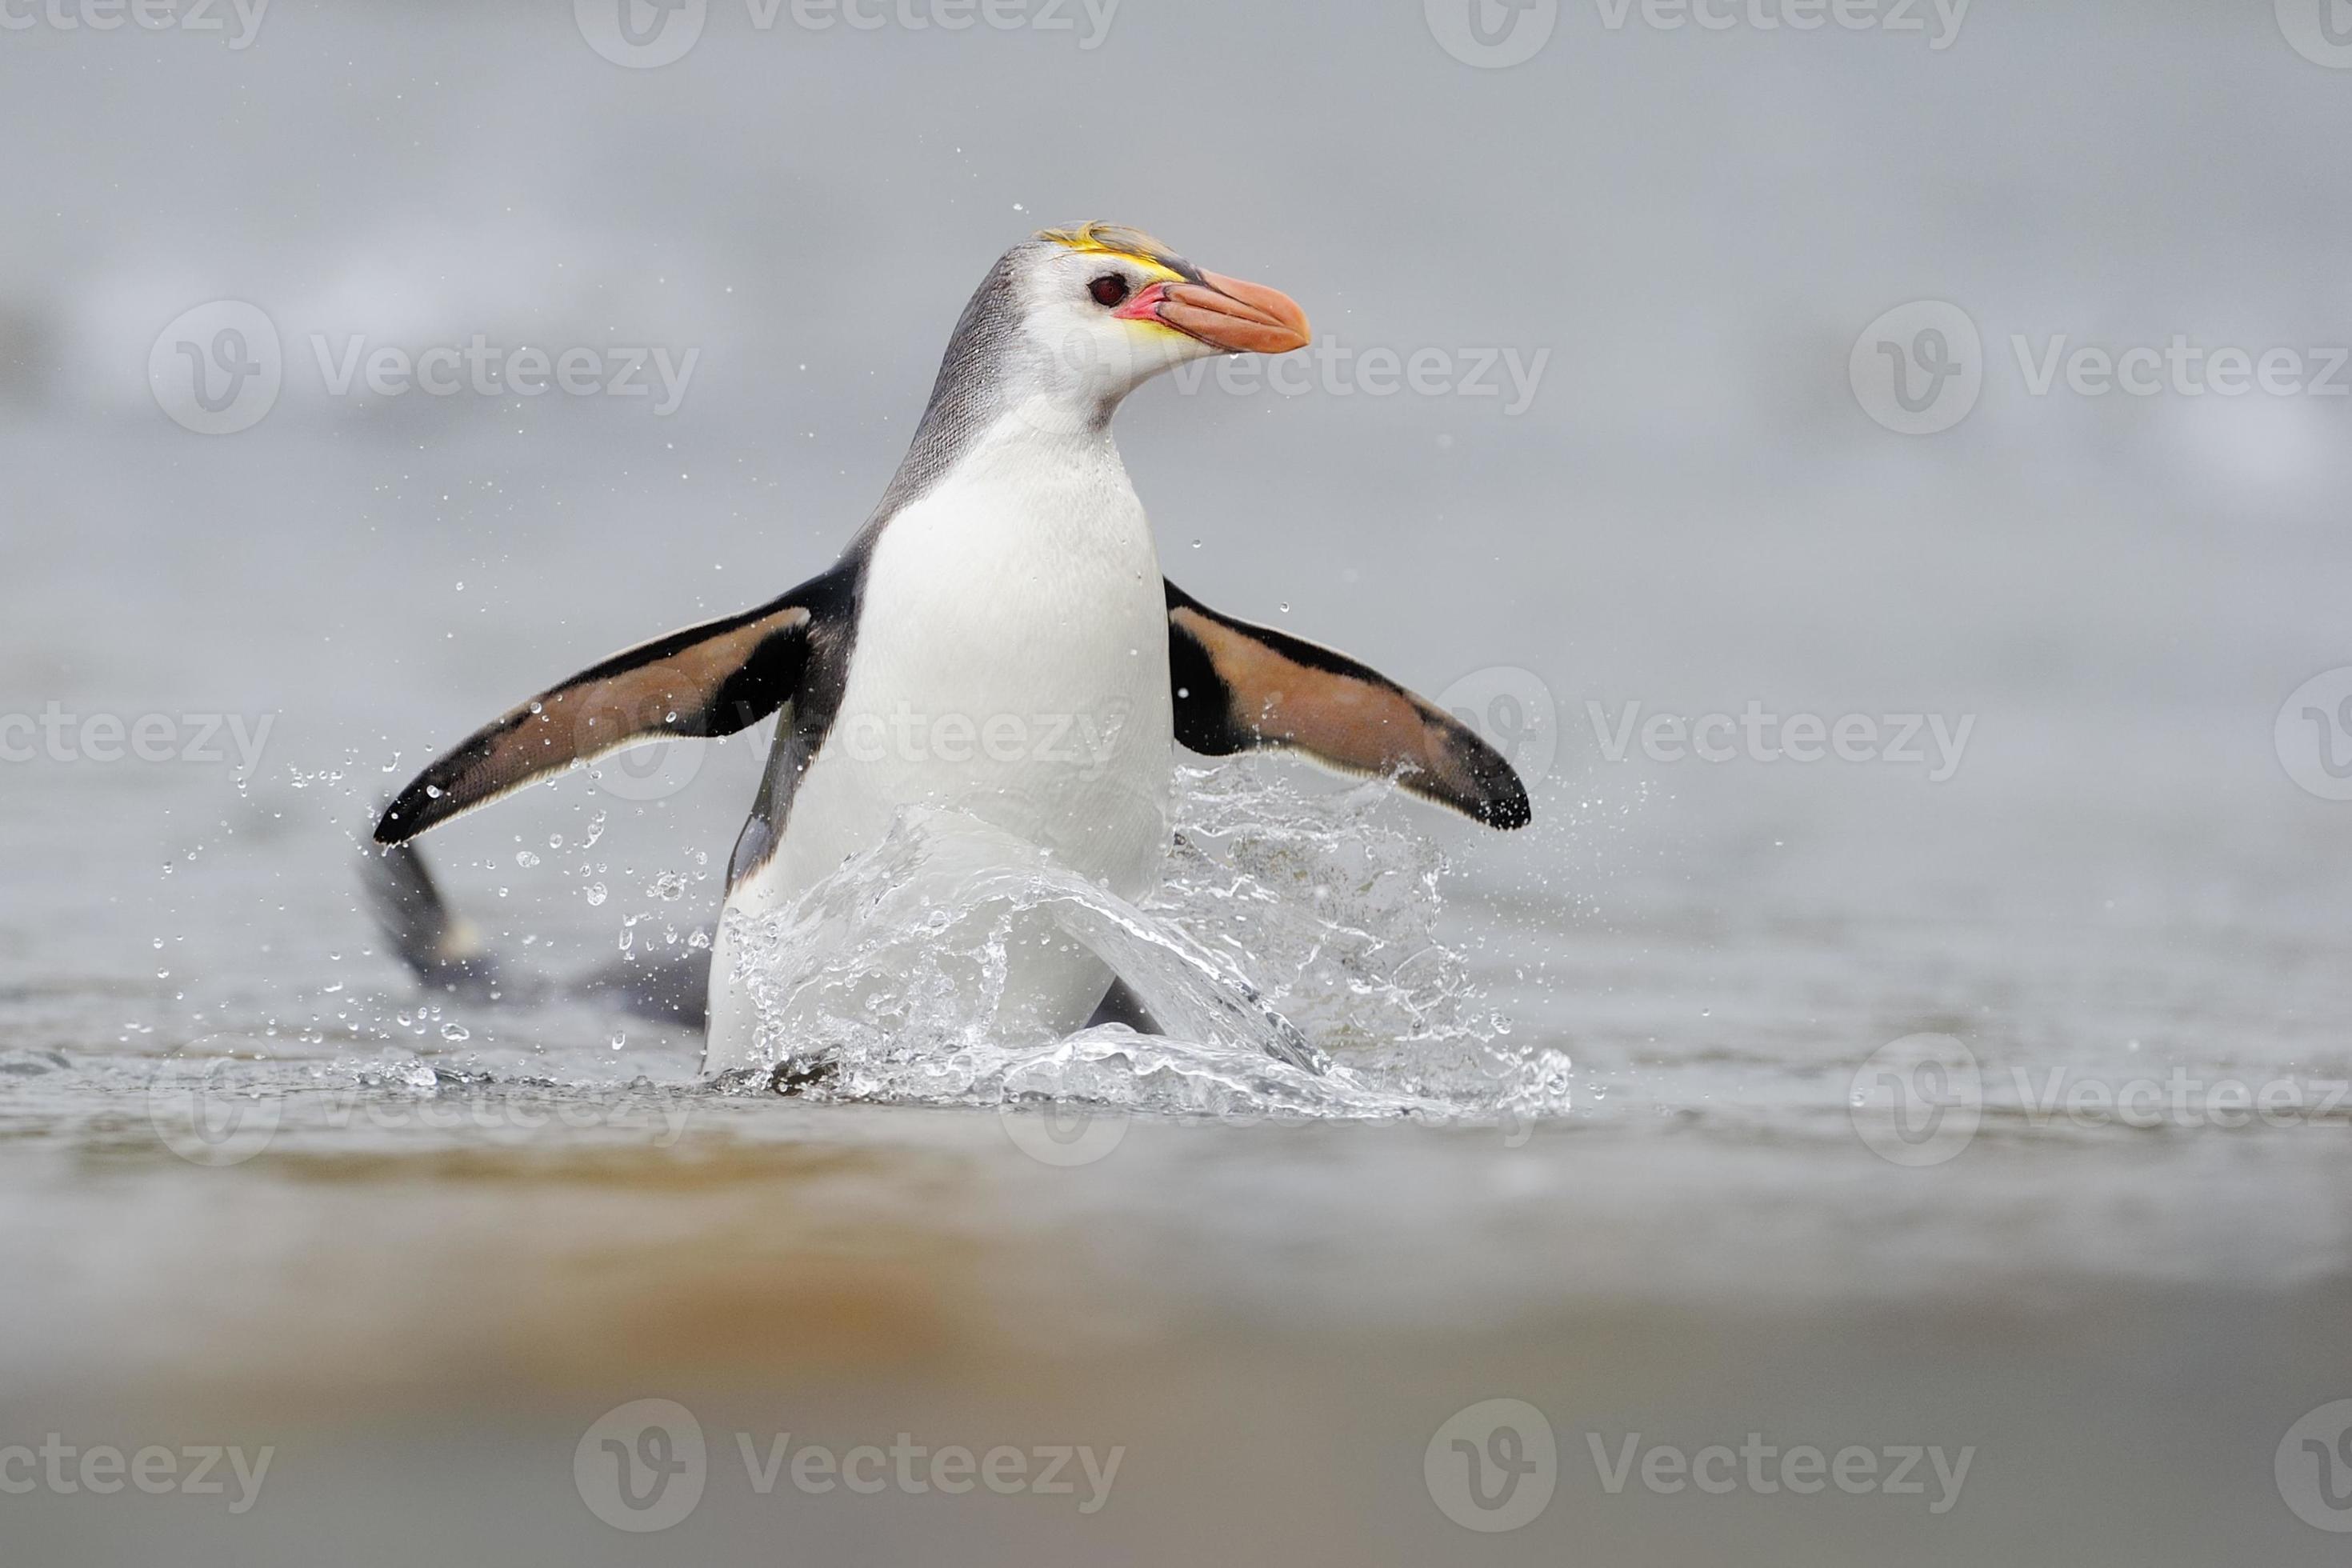 Royal Penguin (Eudyptes schlegeli) photo